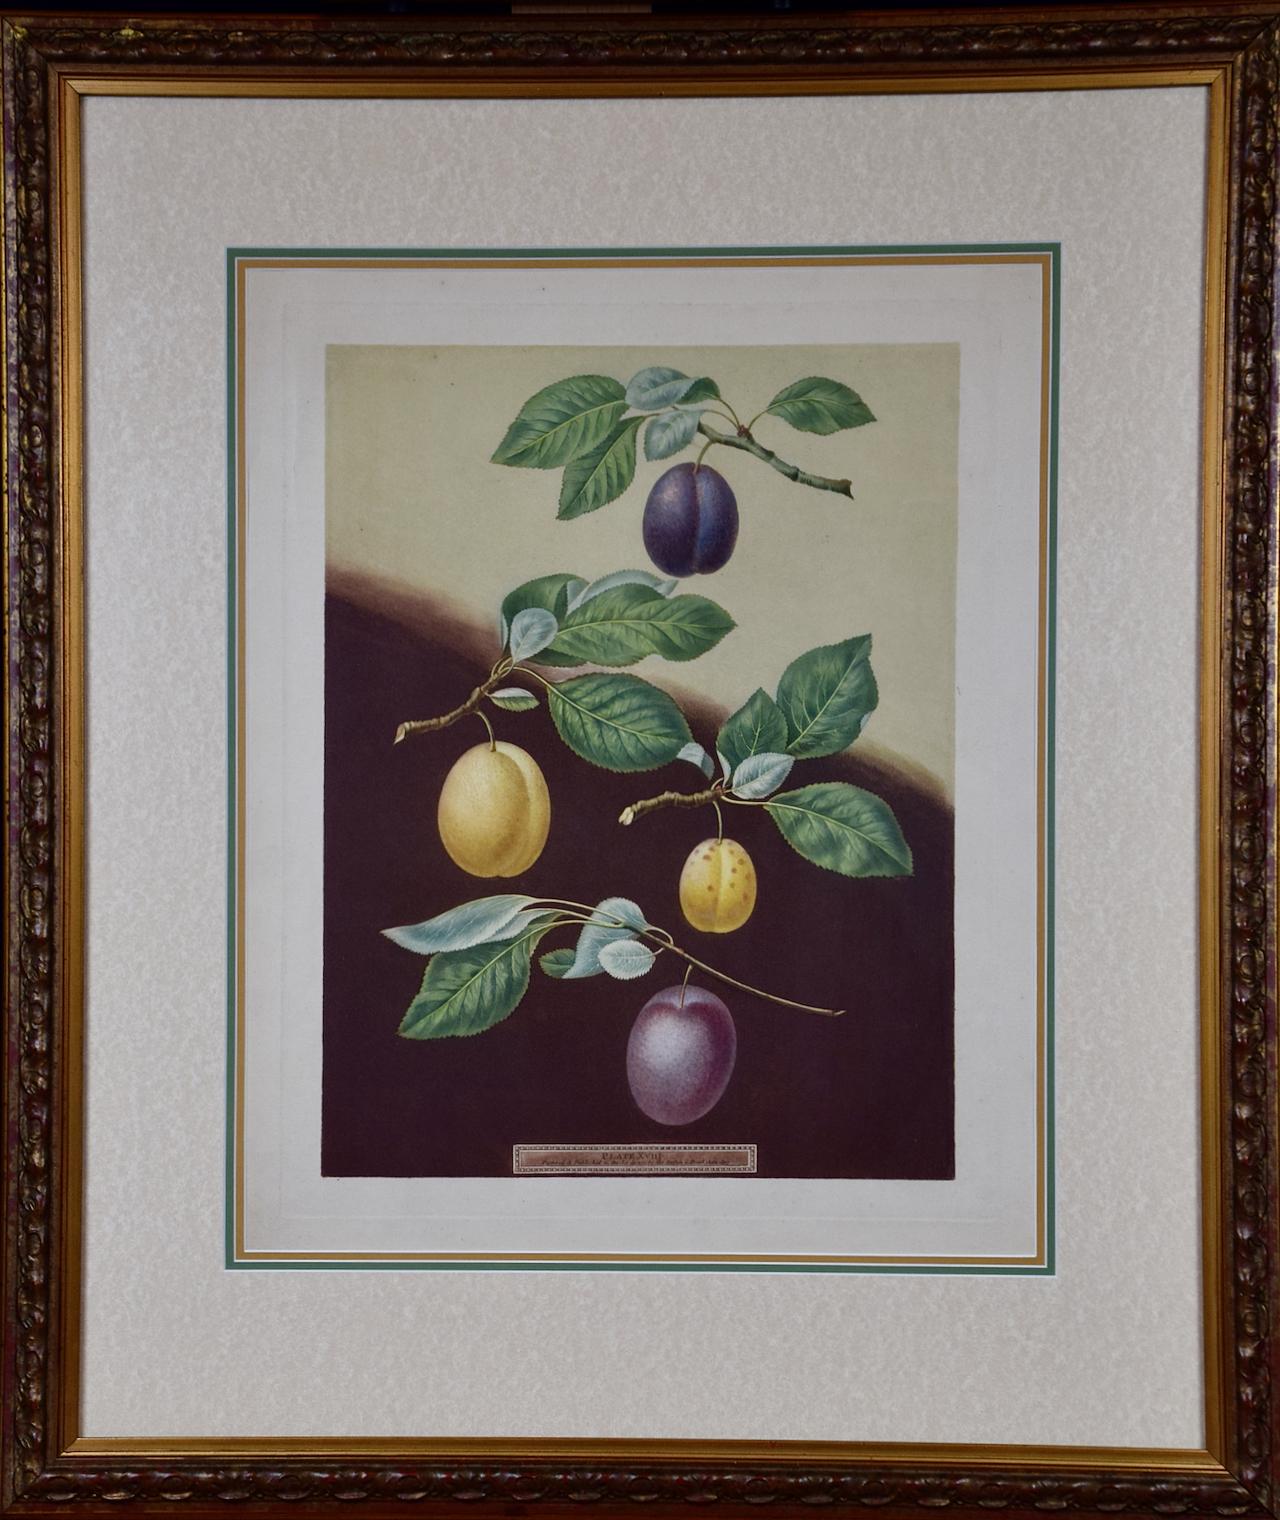 Plums: George Brookshaw's Framed Hand-colored 19th C. Aquatint